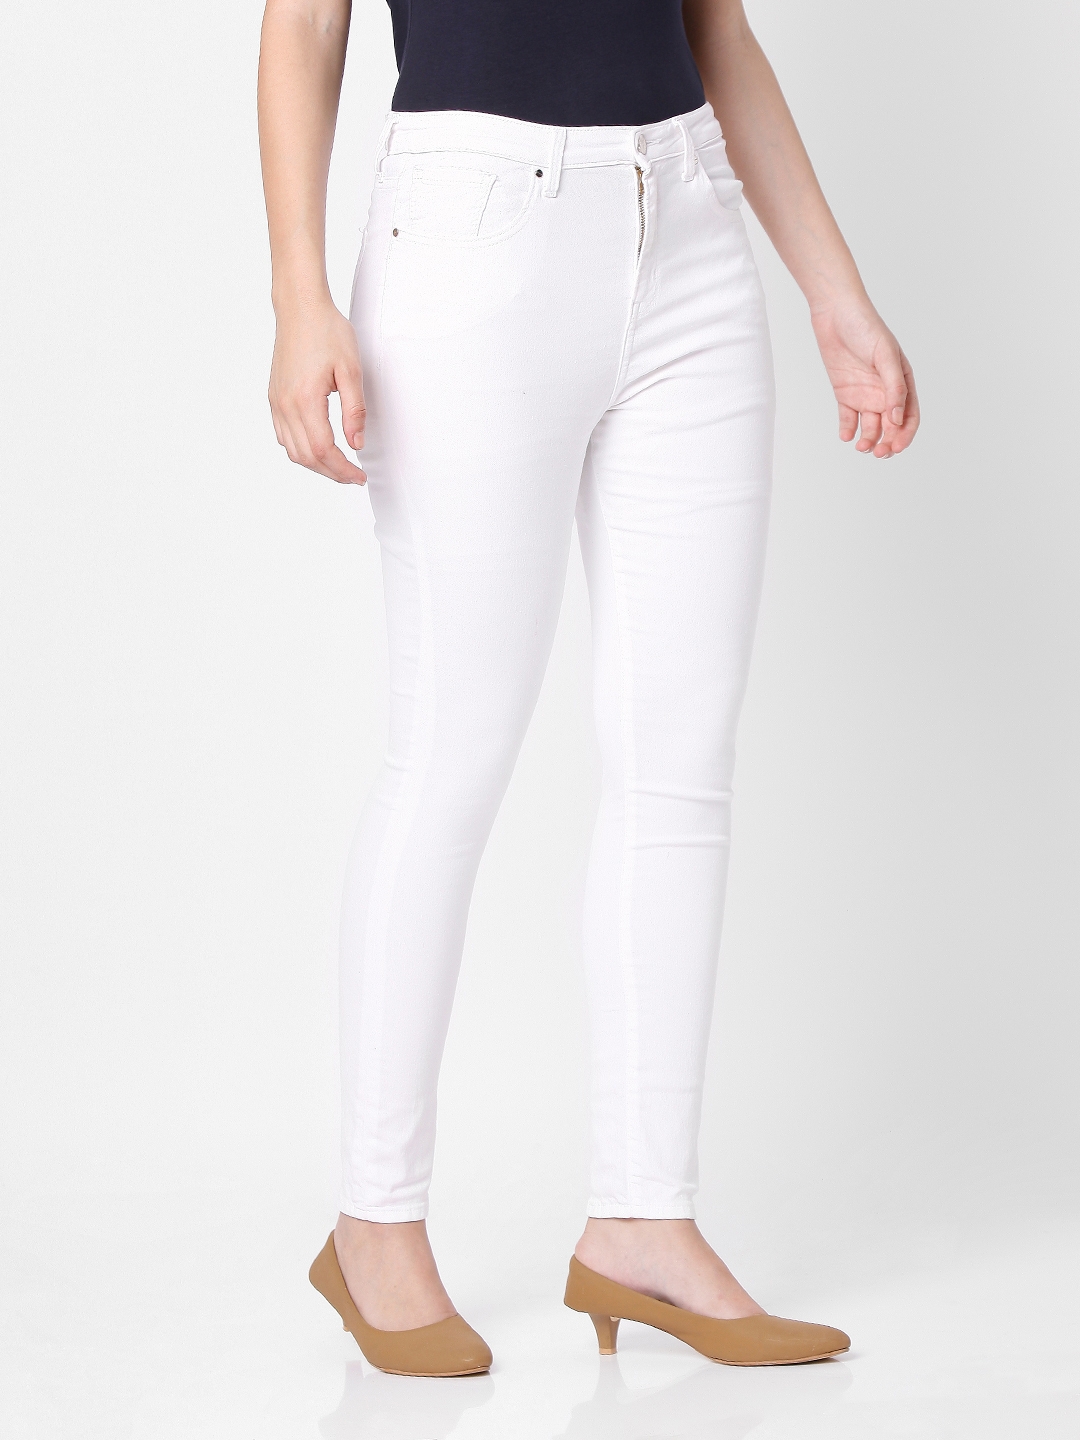 spykar | Women's White Cotton Solid Skinny Jeans 2